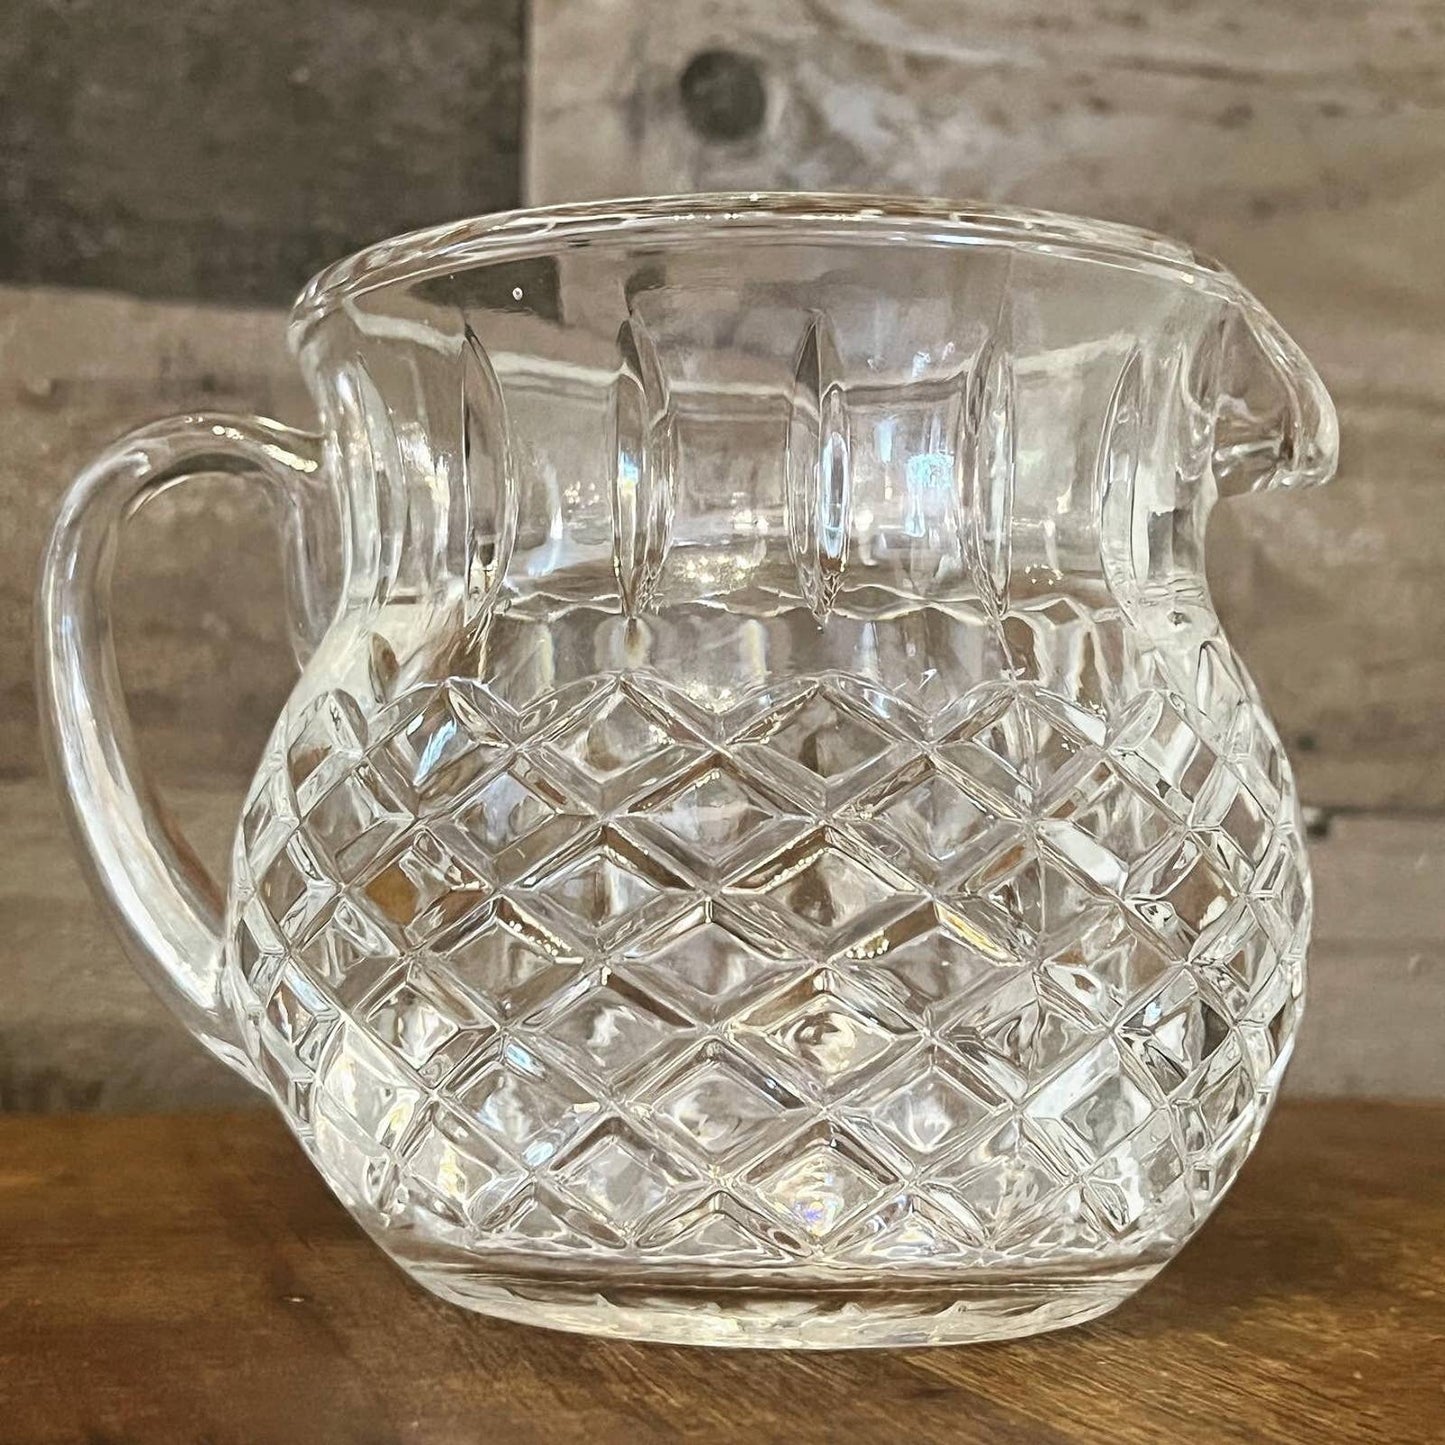 Vintage petite diamond cut heavy crystal handles pitcher - squat pitcher - martini pitcher - drink pitcher - bar pitcher - bar cart pitcher